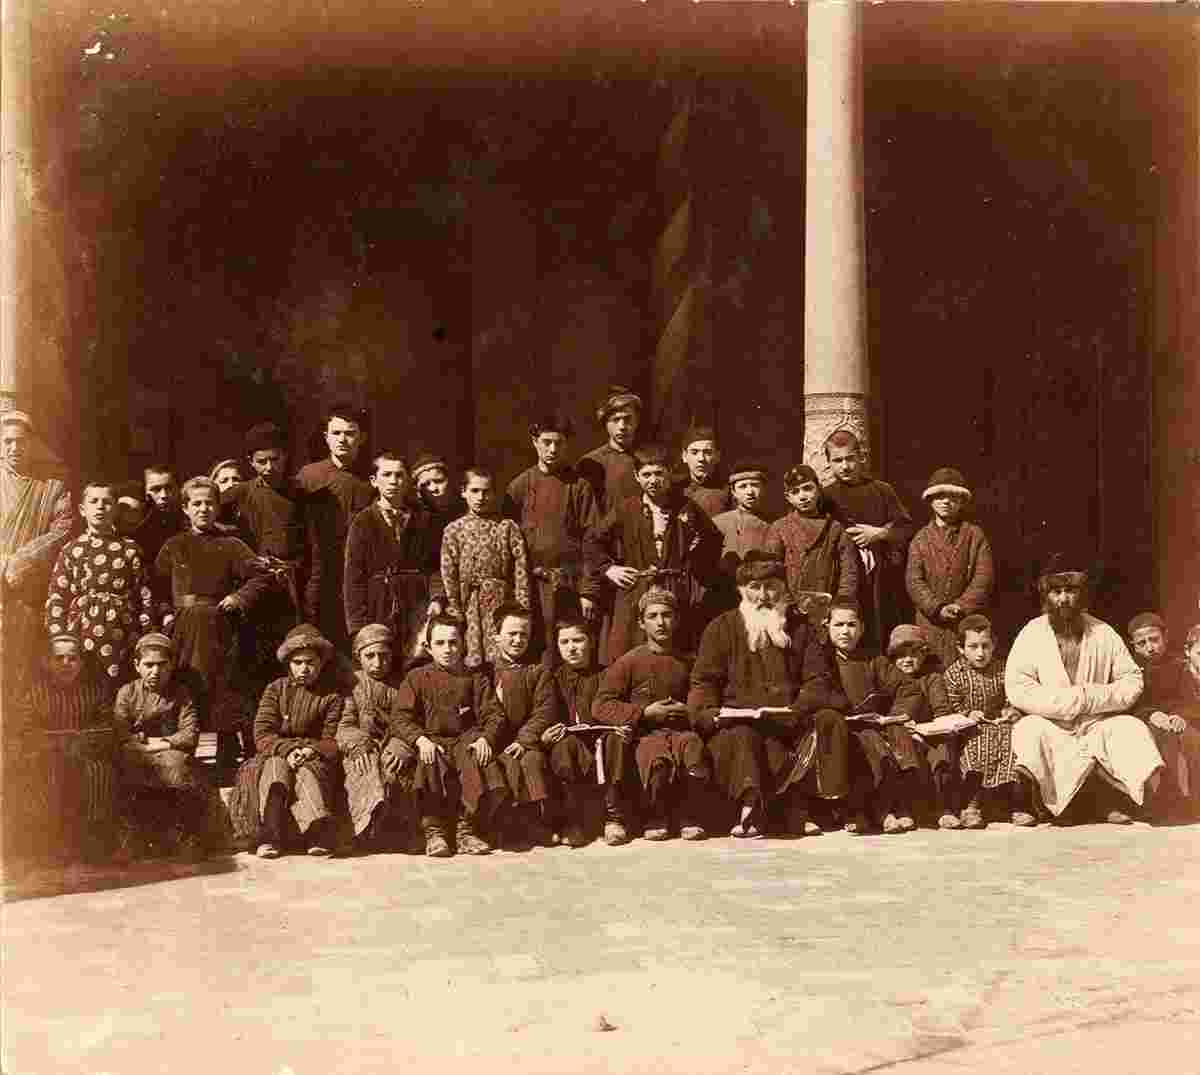 Samarkand. Pupils of a Jewish school with a teacher, 1905